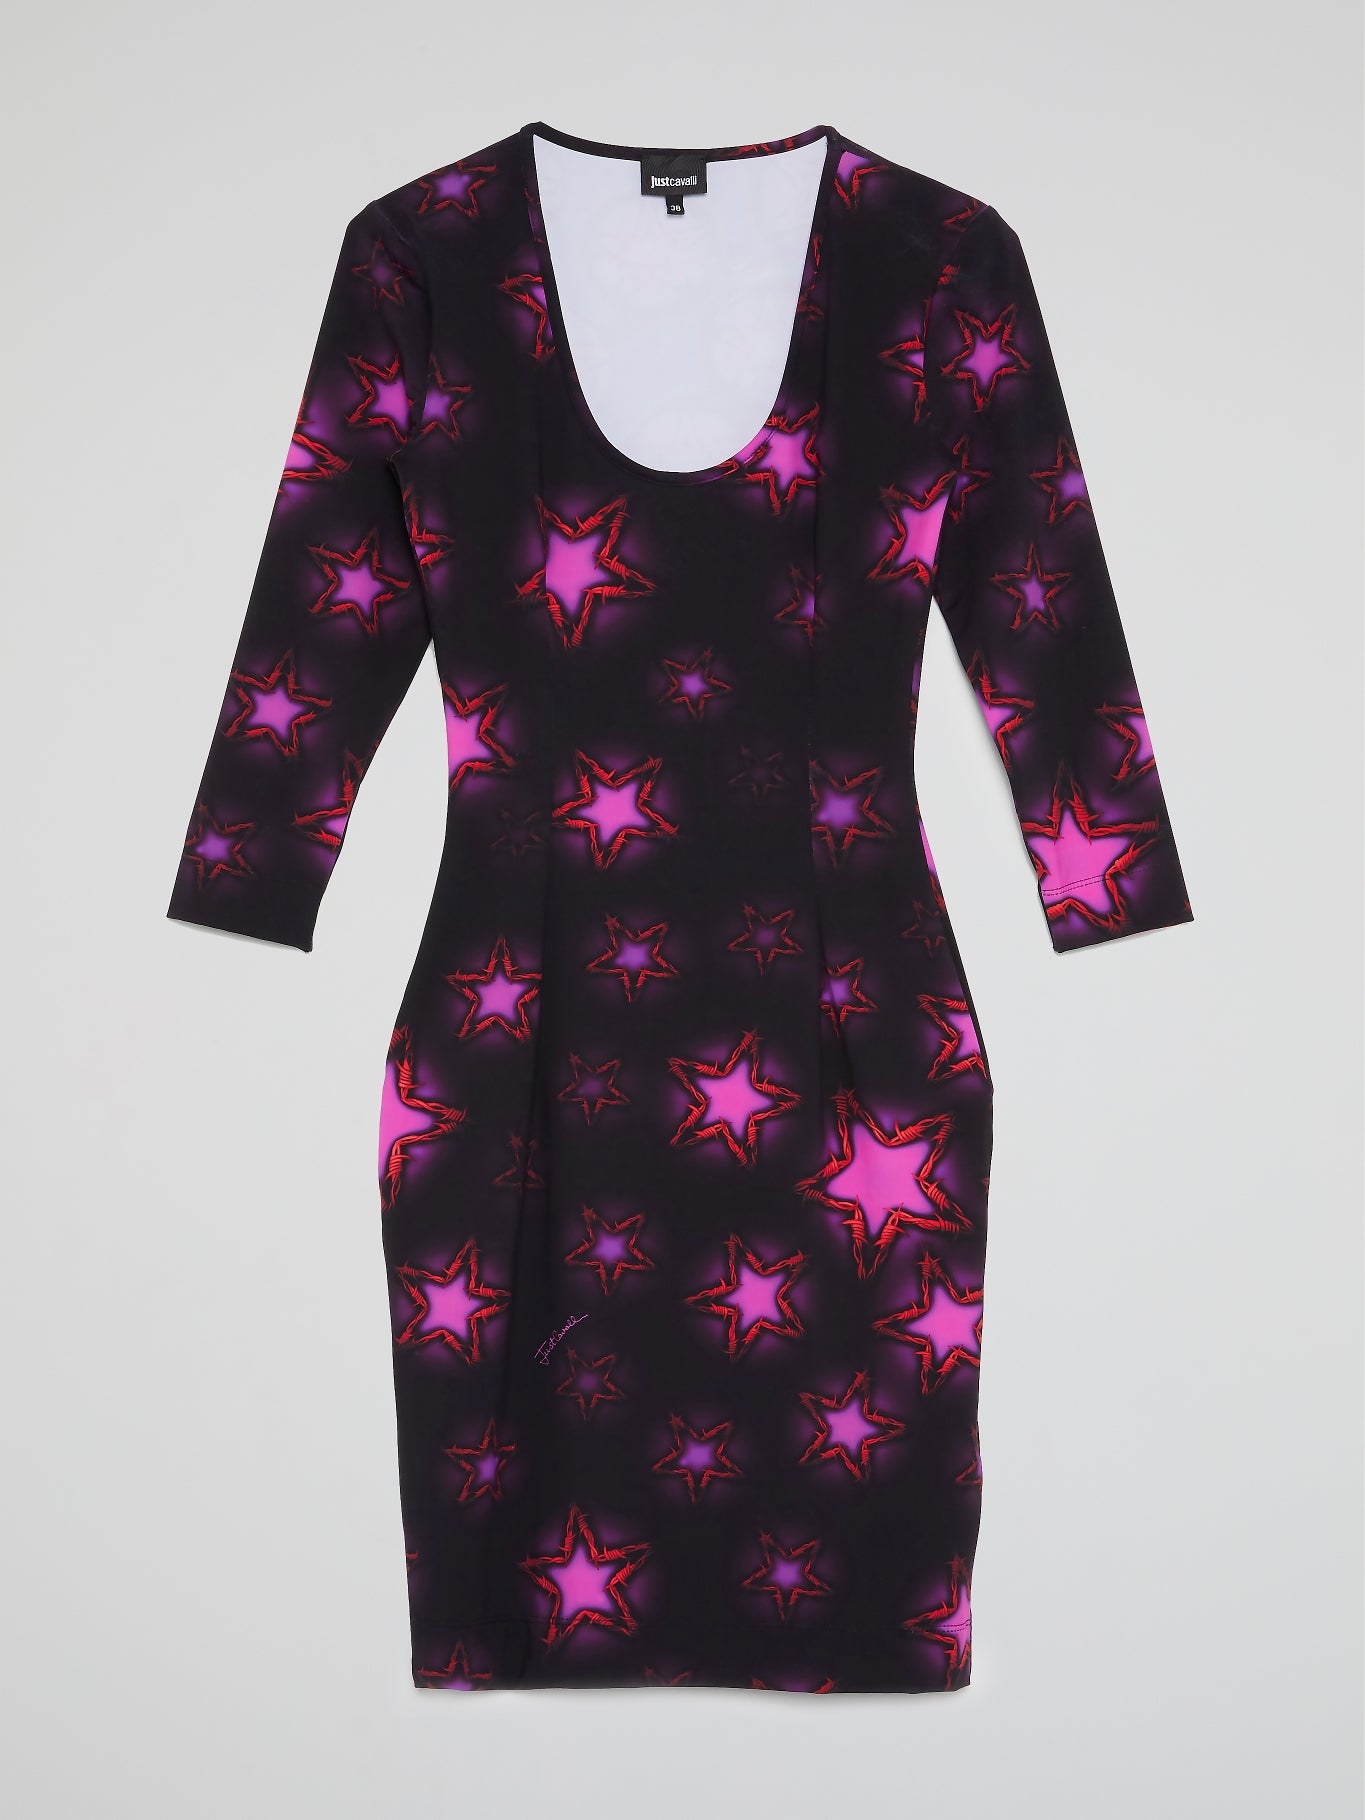 Purple Star Print Scoop Neck Dress